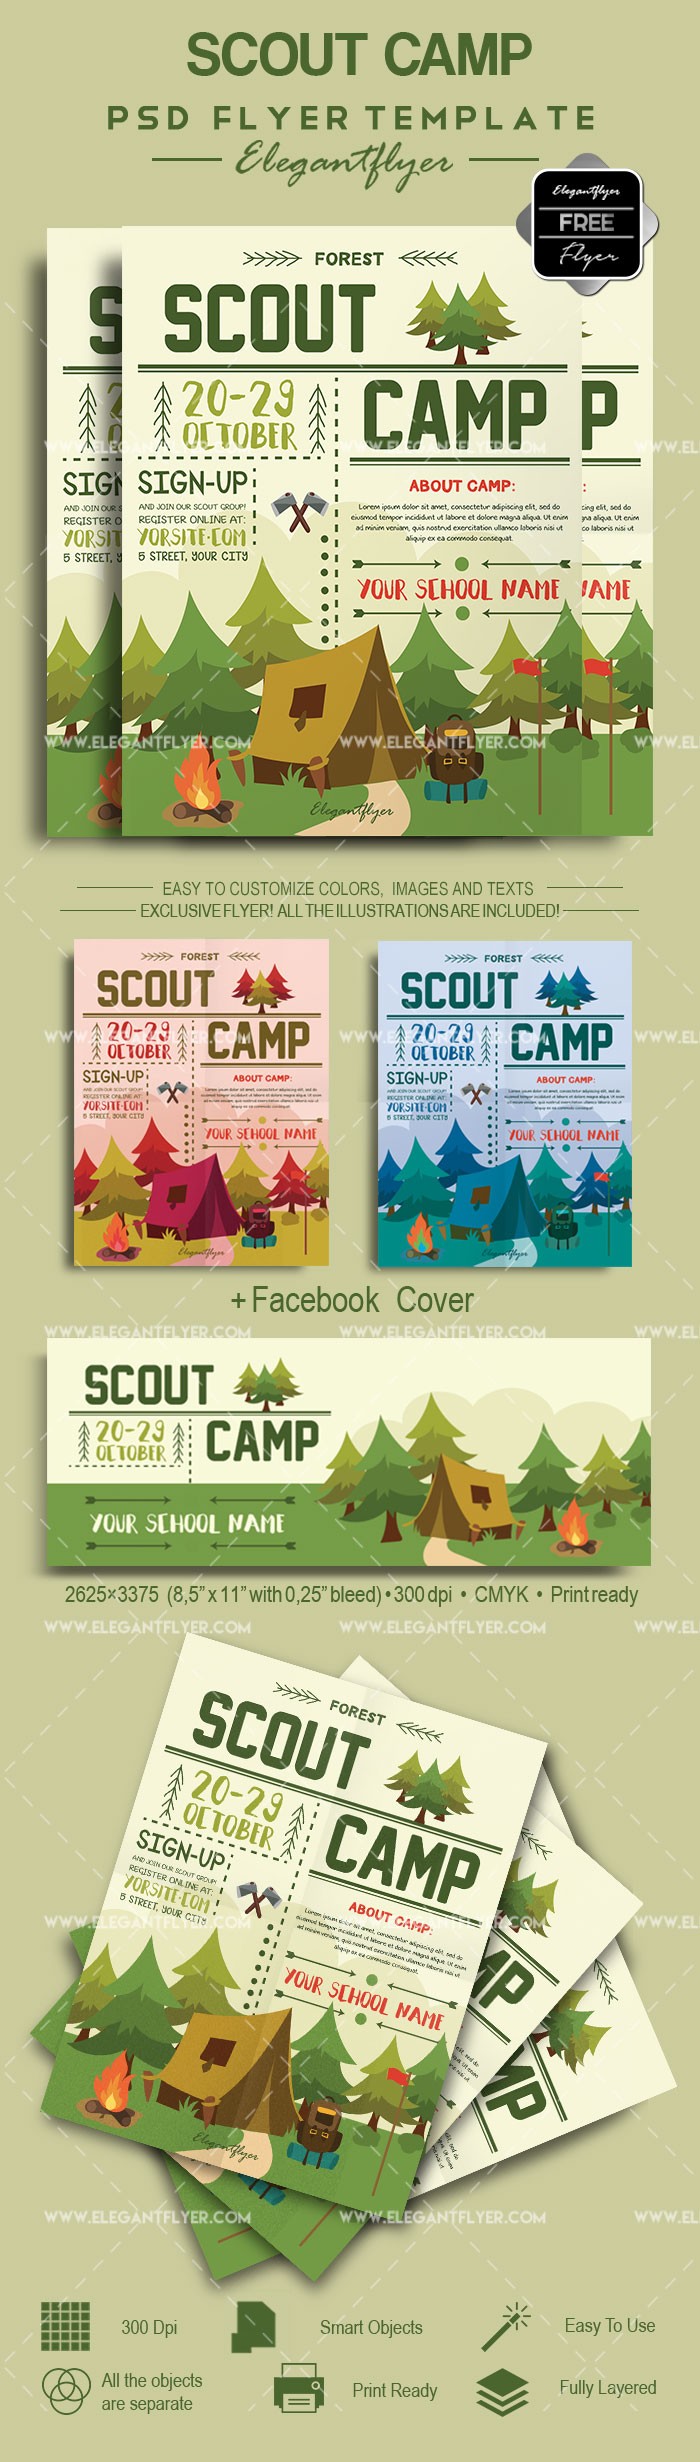 Camp de scout by ElegantFlyer